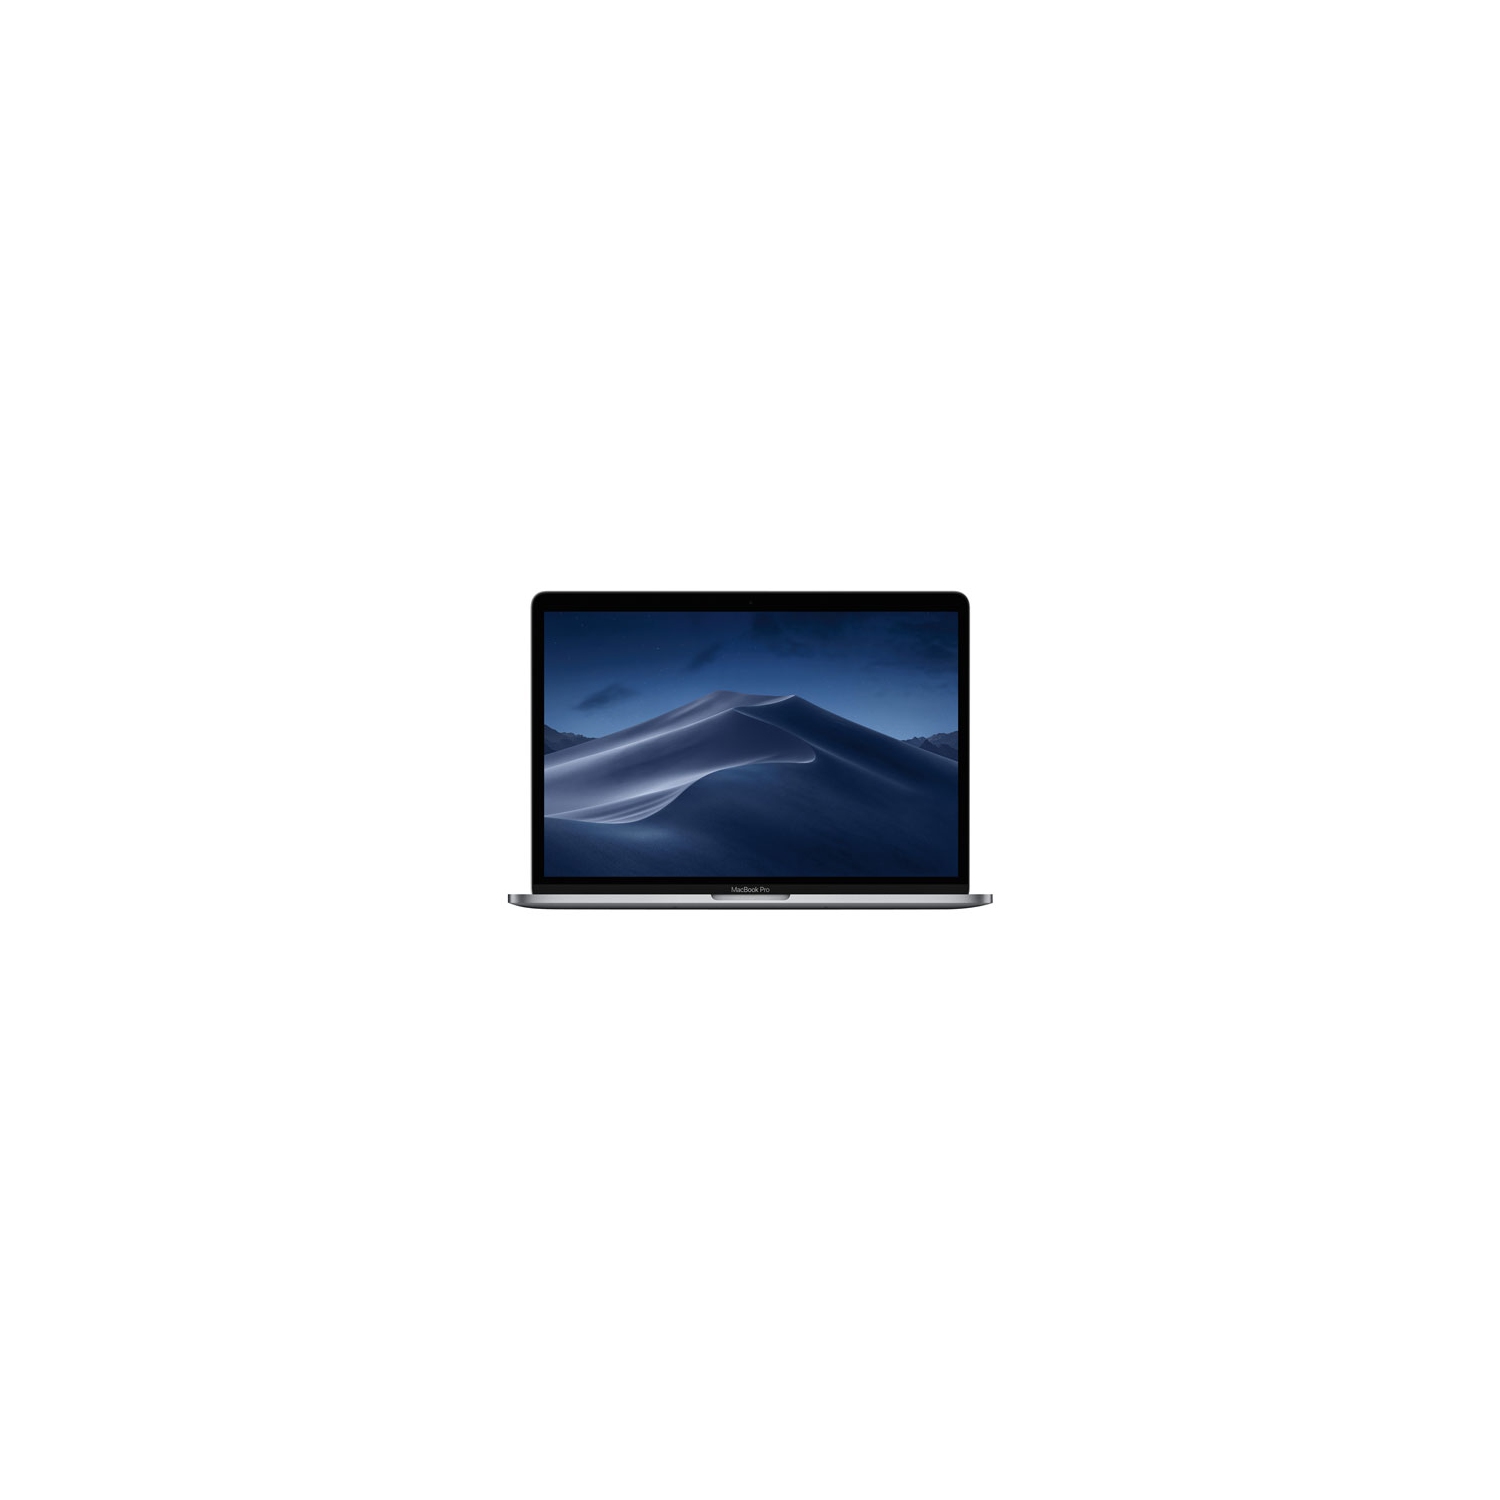 Refurbished (Good) - Apple MacBook Pro (2017) 13.3" Laptop - Space Grey (i5 2.3GHz/128GB SSD/8GB RAM)- English